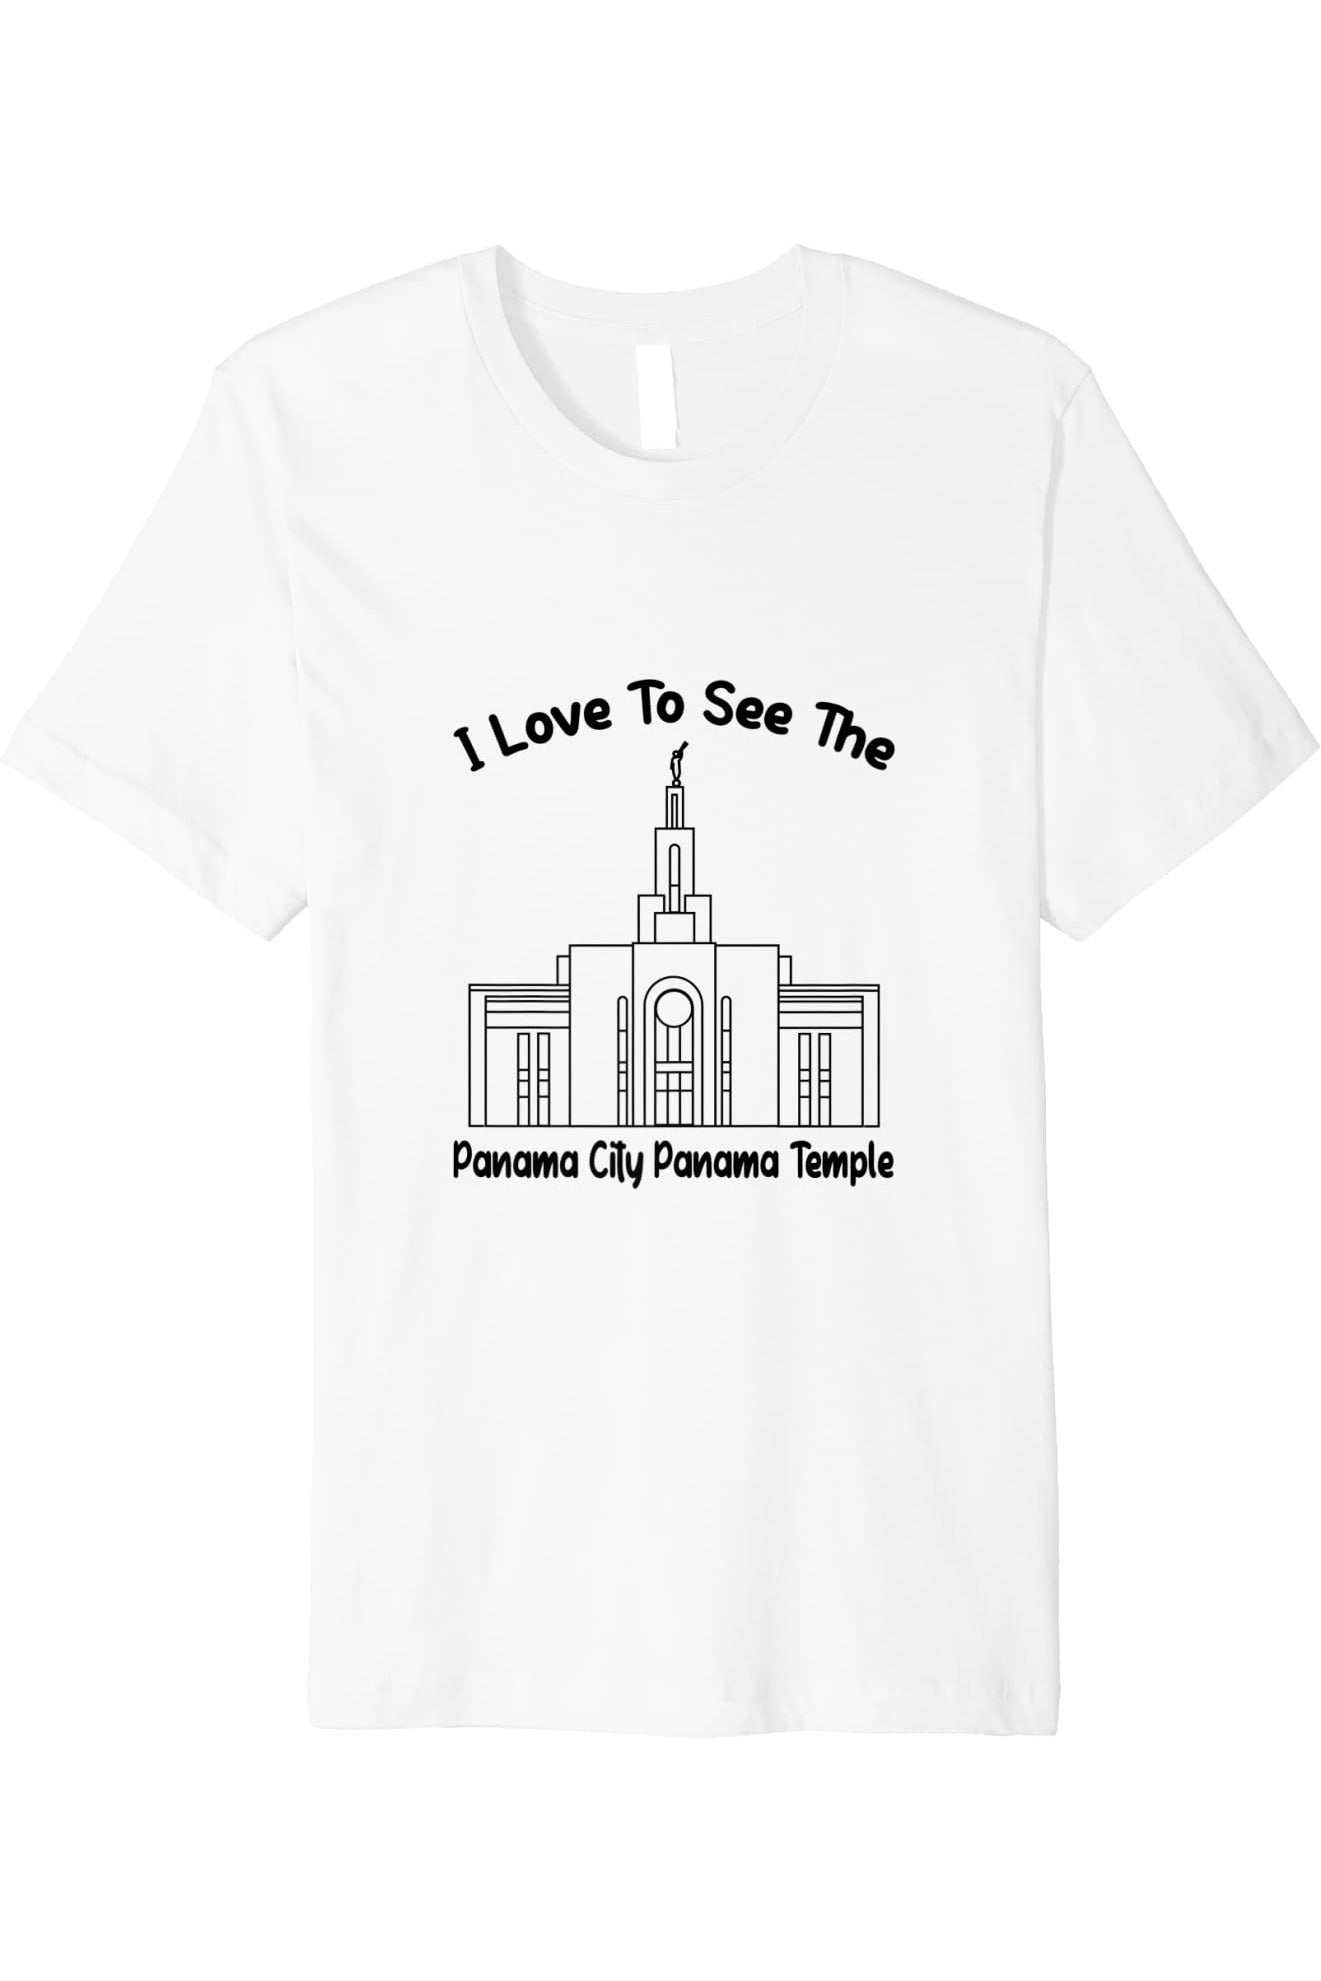 Panama City Panama Temple T-Shirt - Premium - Primary Style (English) US